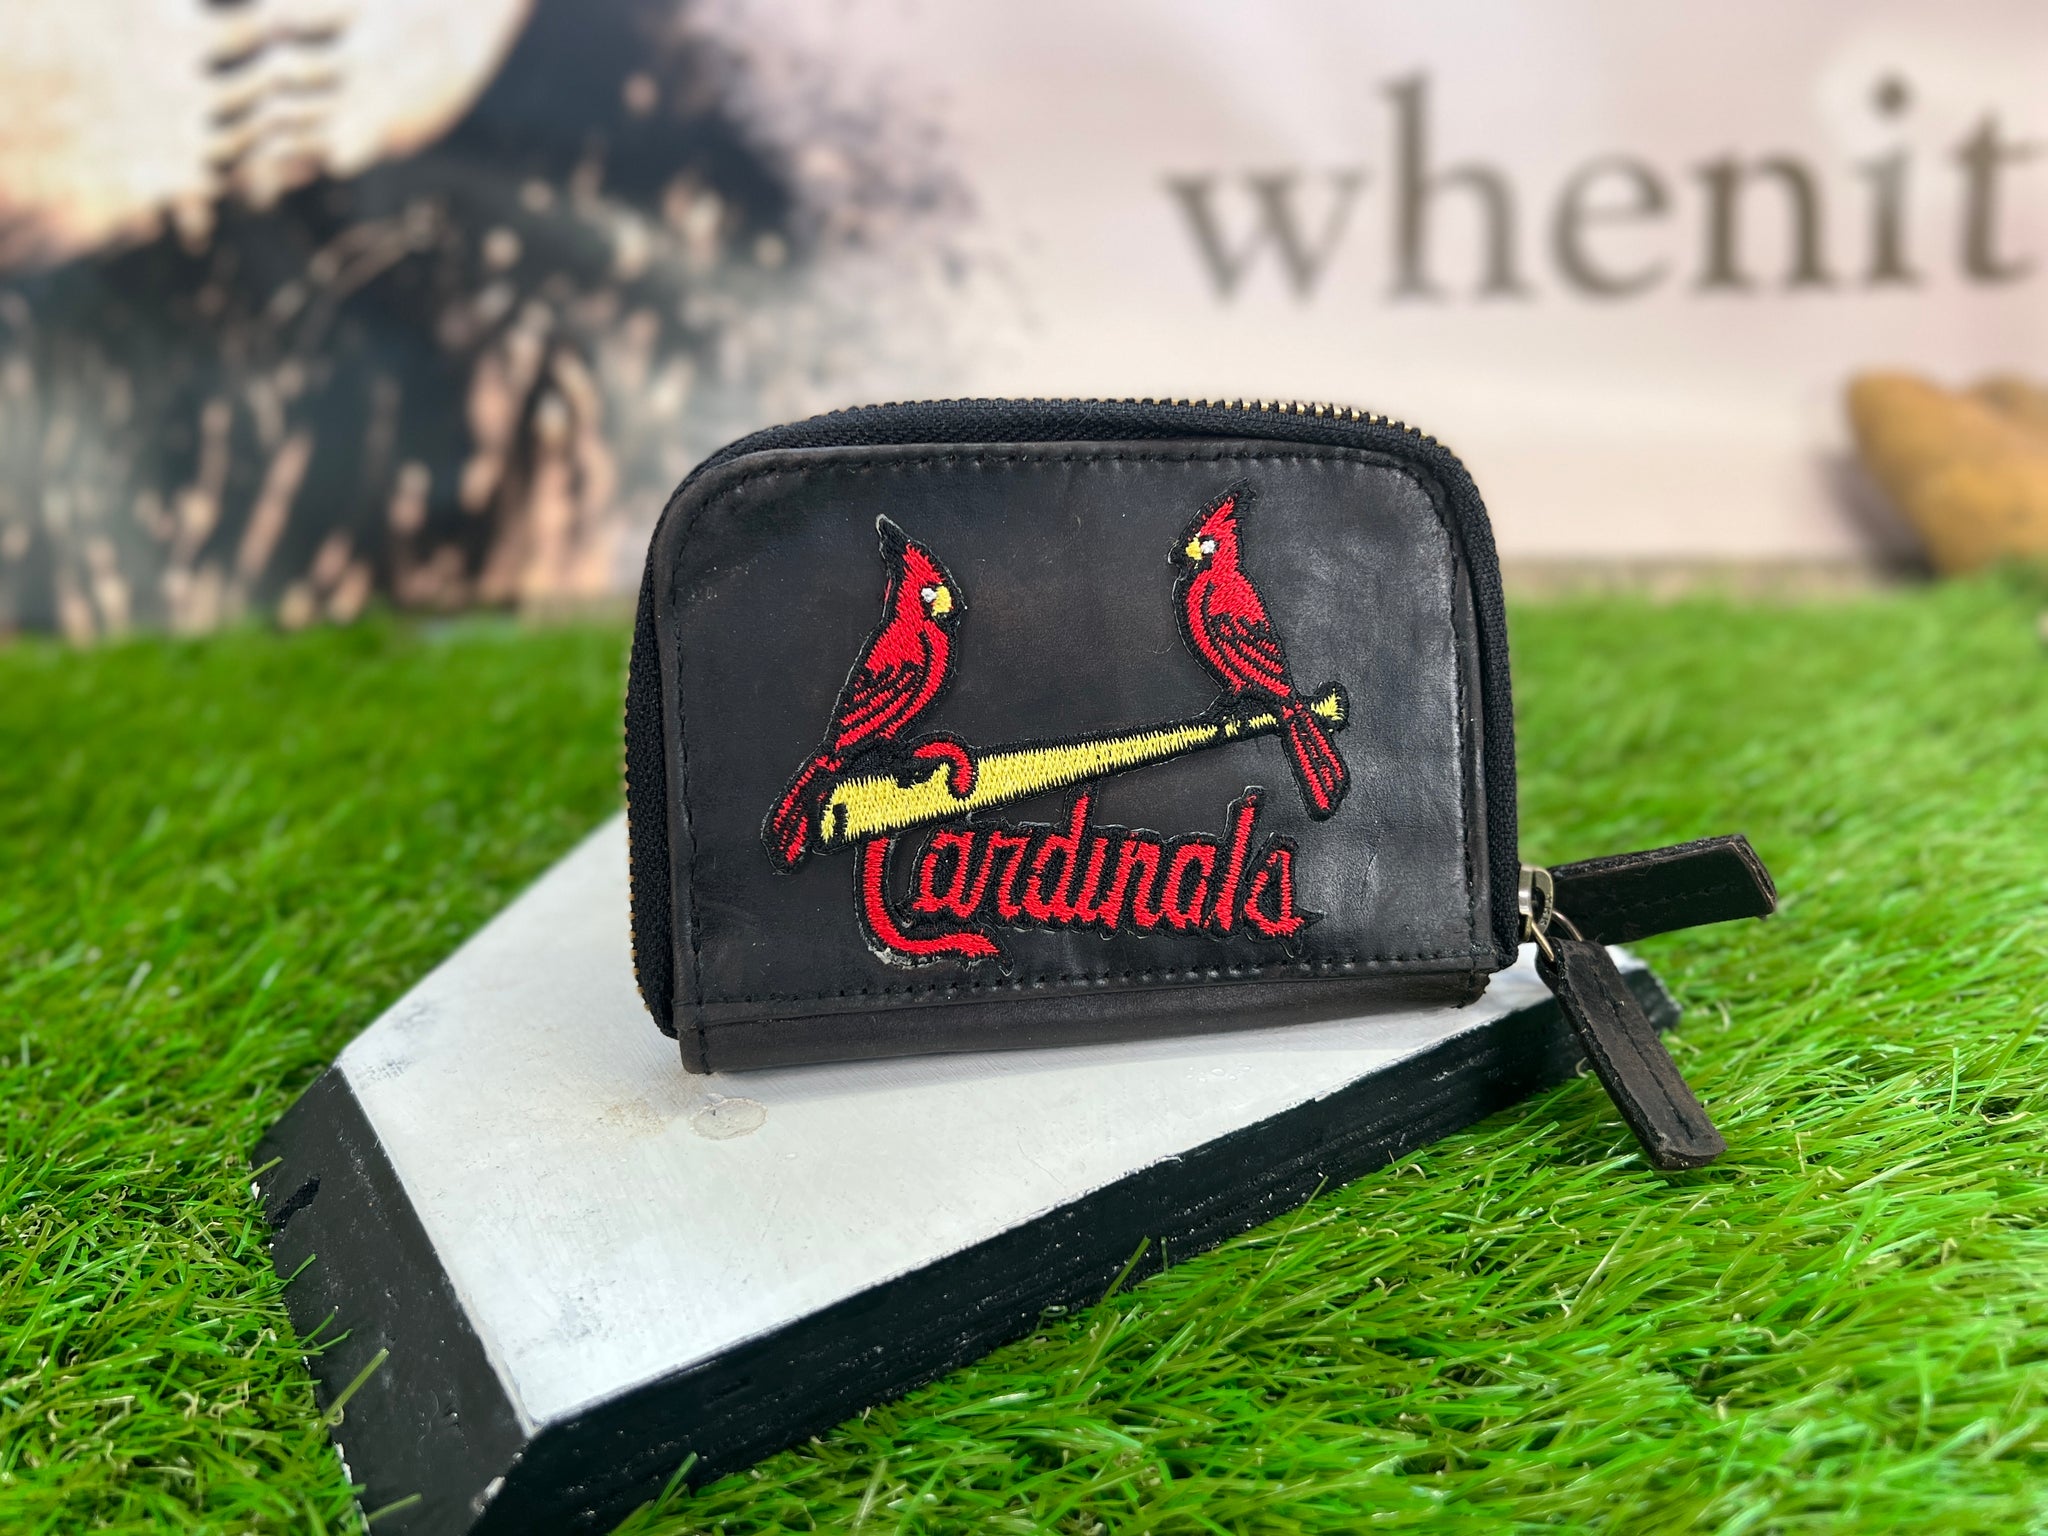 St. Louis Cardinals Baseball Women's Wallet W/ Wrist Strap 